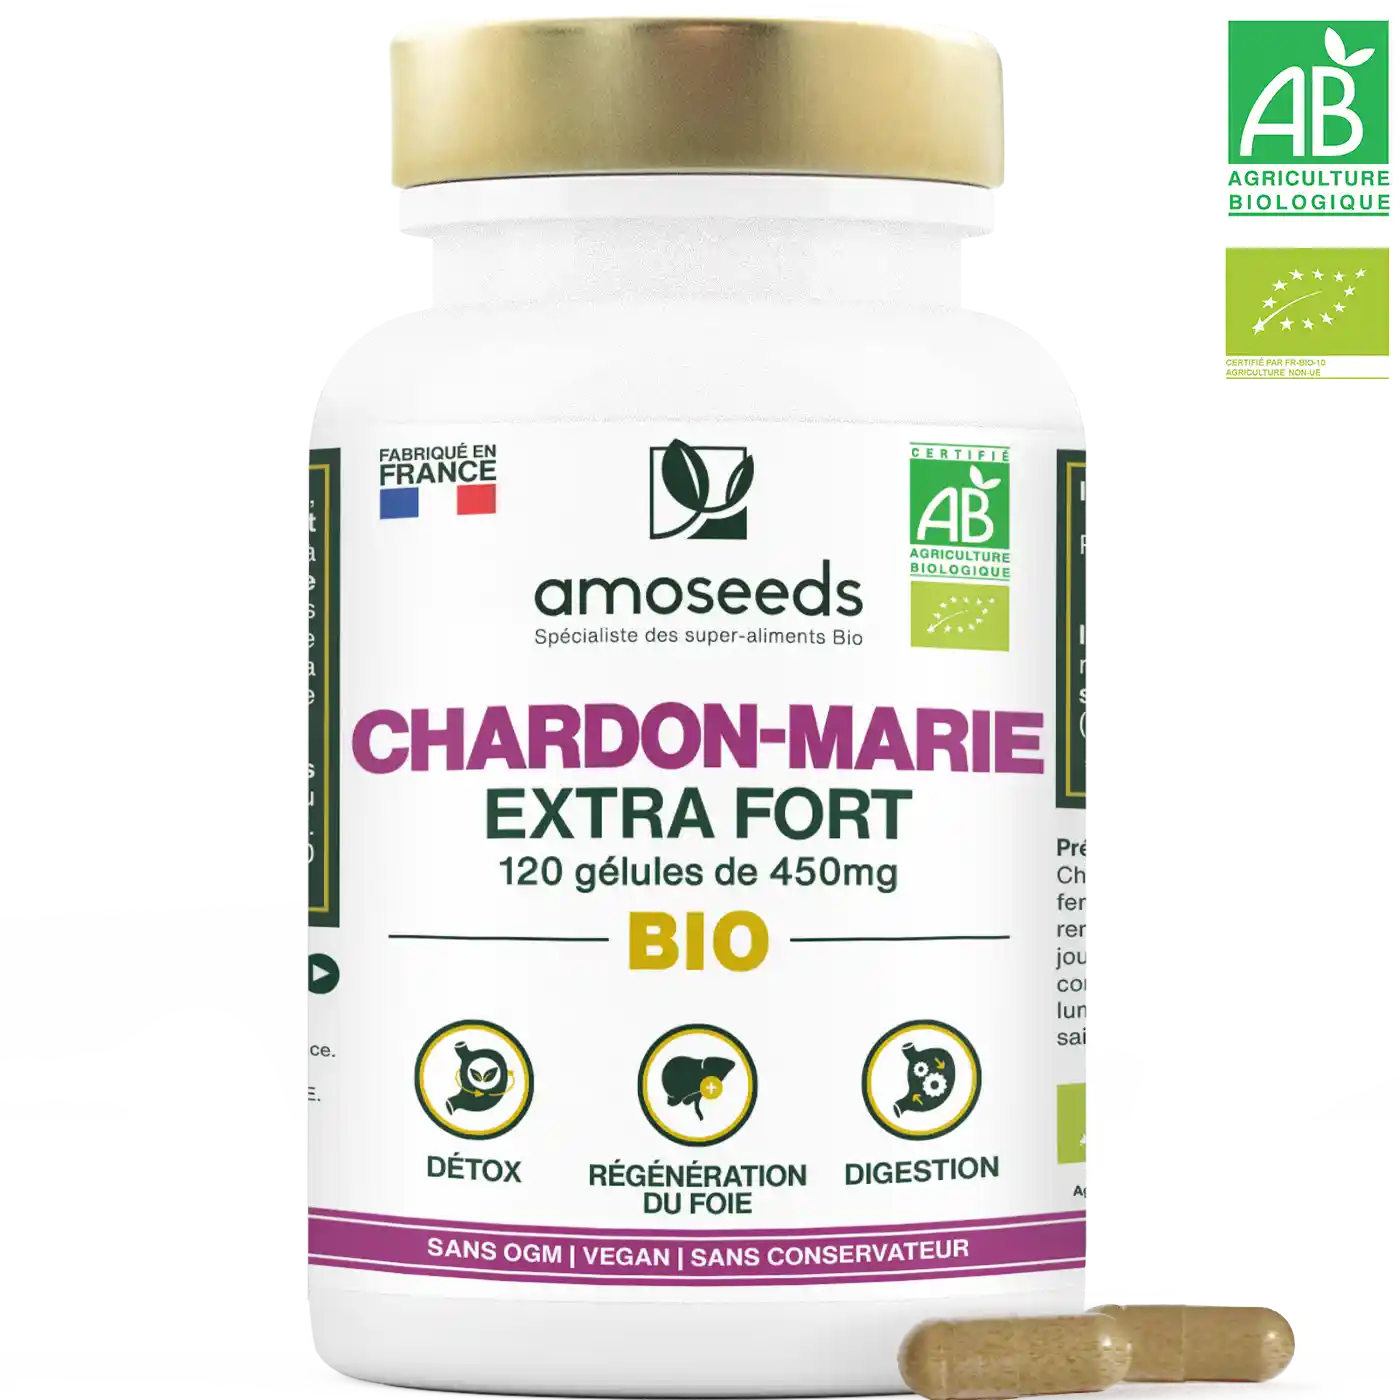 Chardon-Marie Bio gelules amoseeds specialiste des super aliments bio